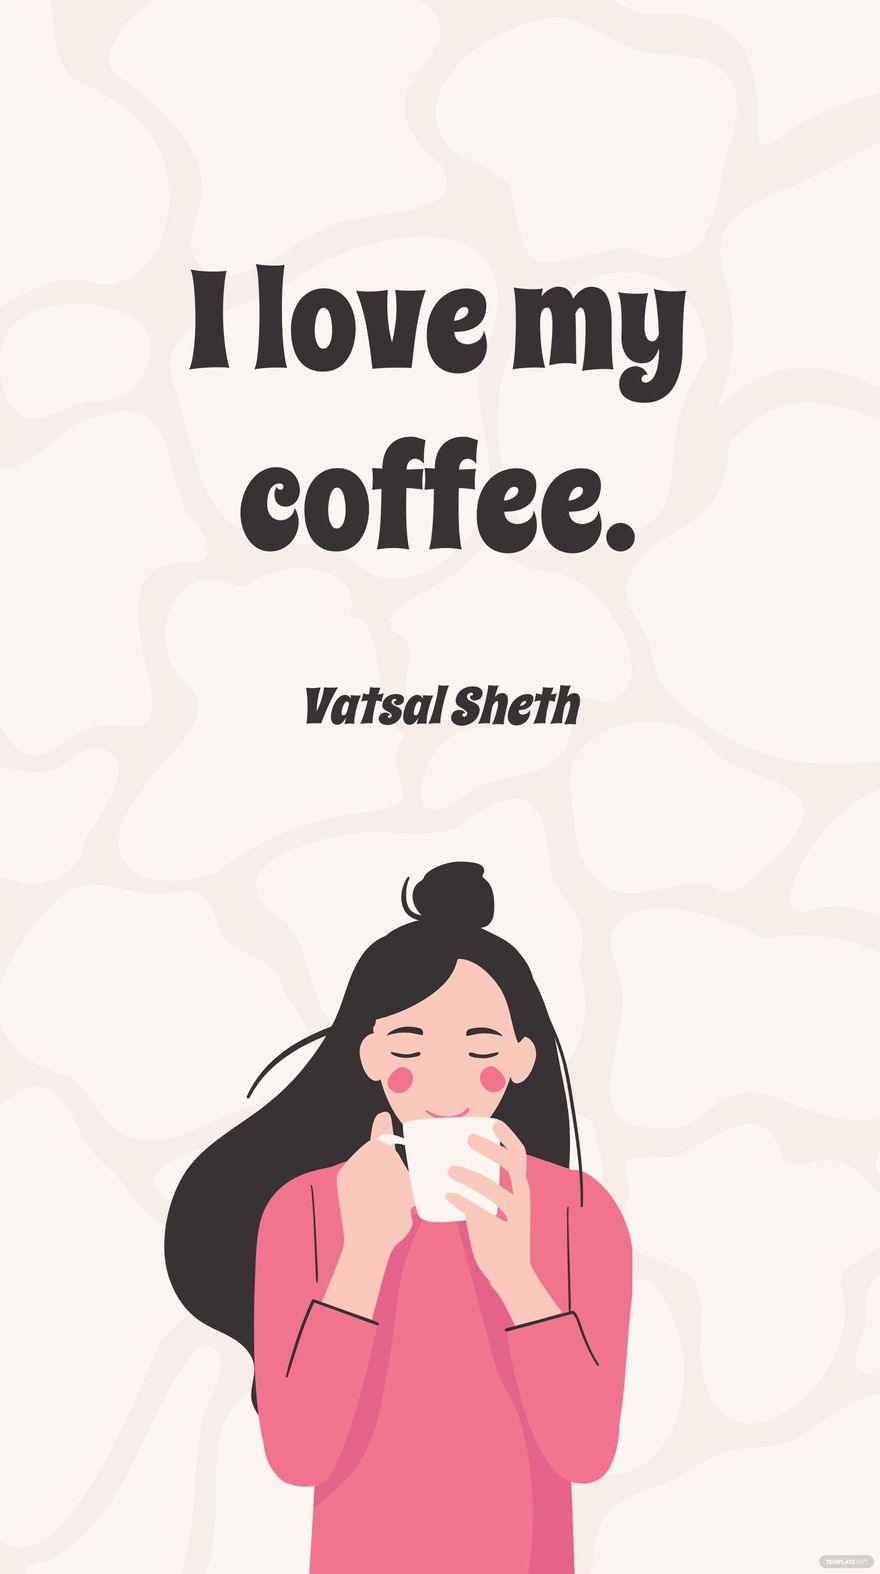 Vatsal Sheth - I love my coffee.